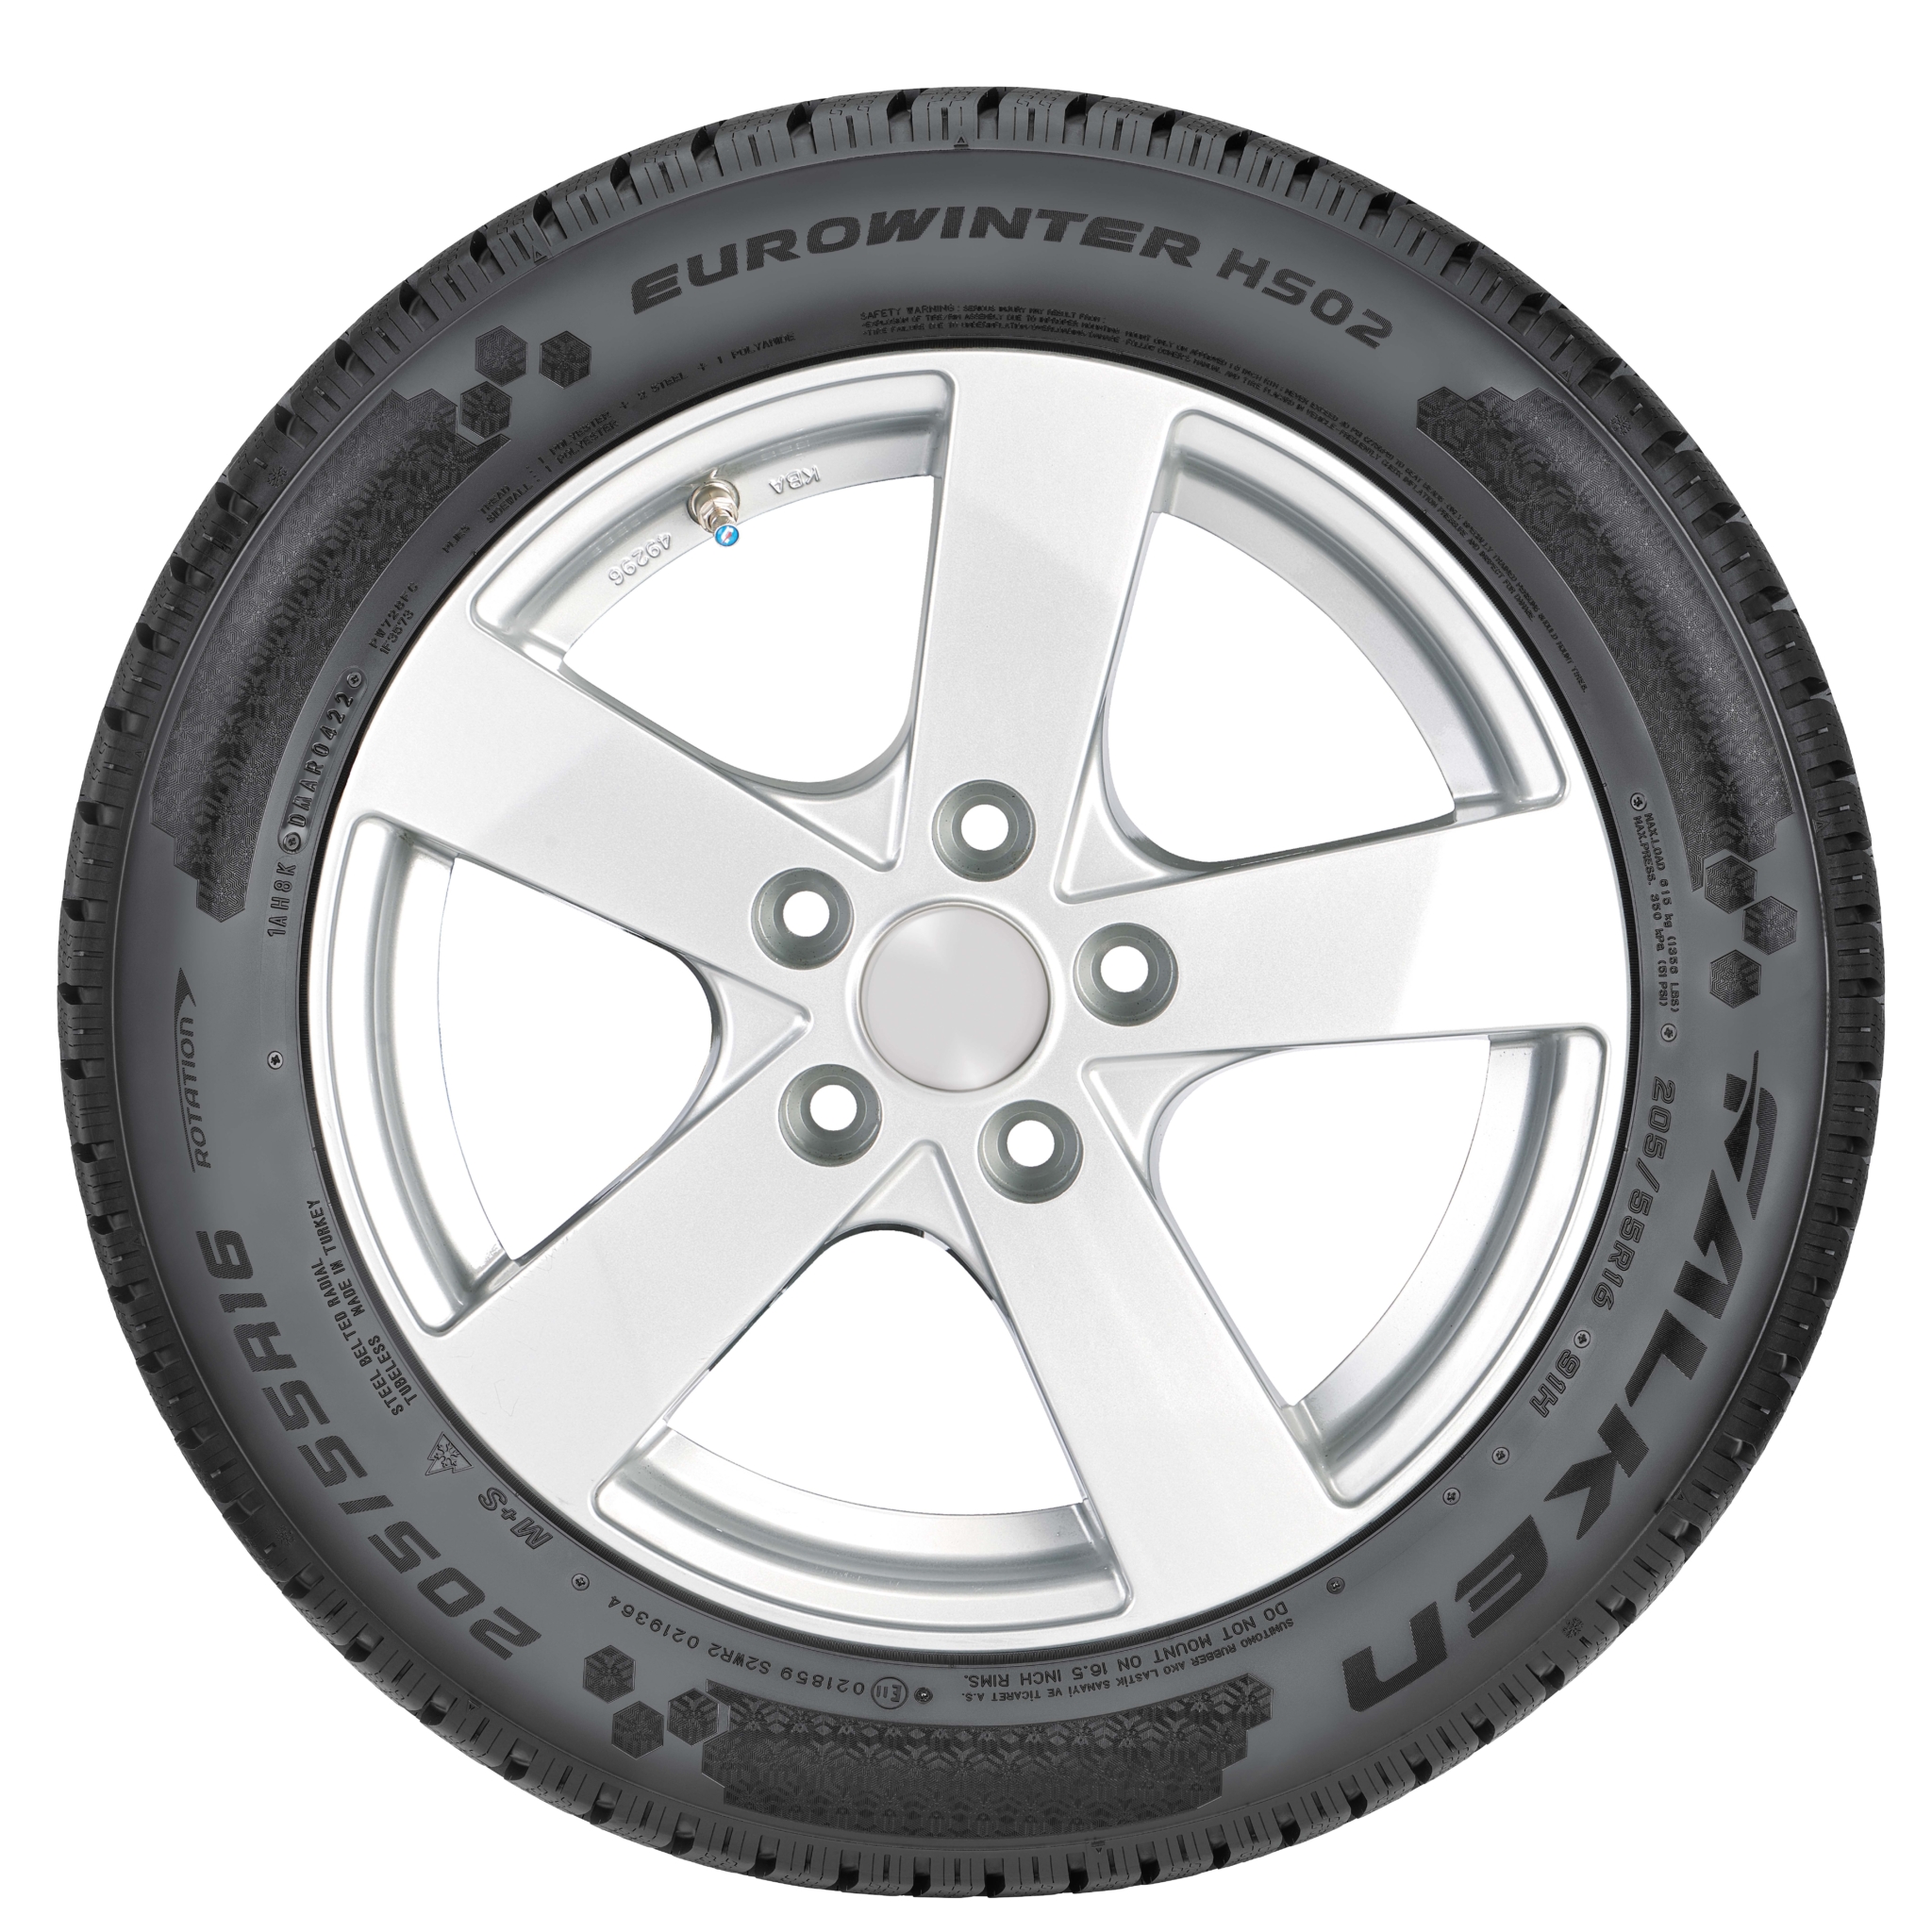 Falken Eurowinter HS02, HS02 Pro tyres to hit UK market this winter